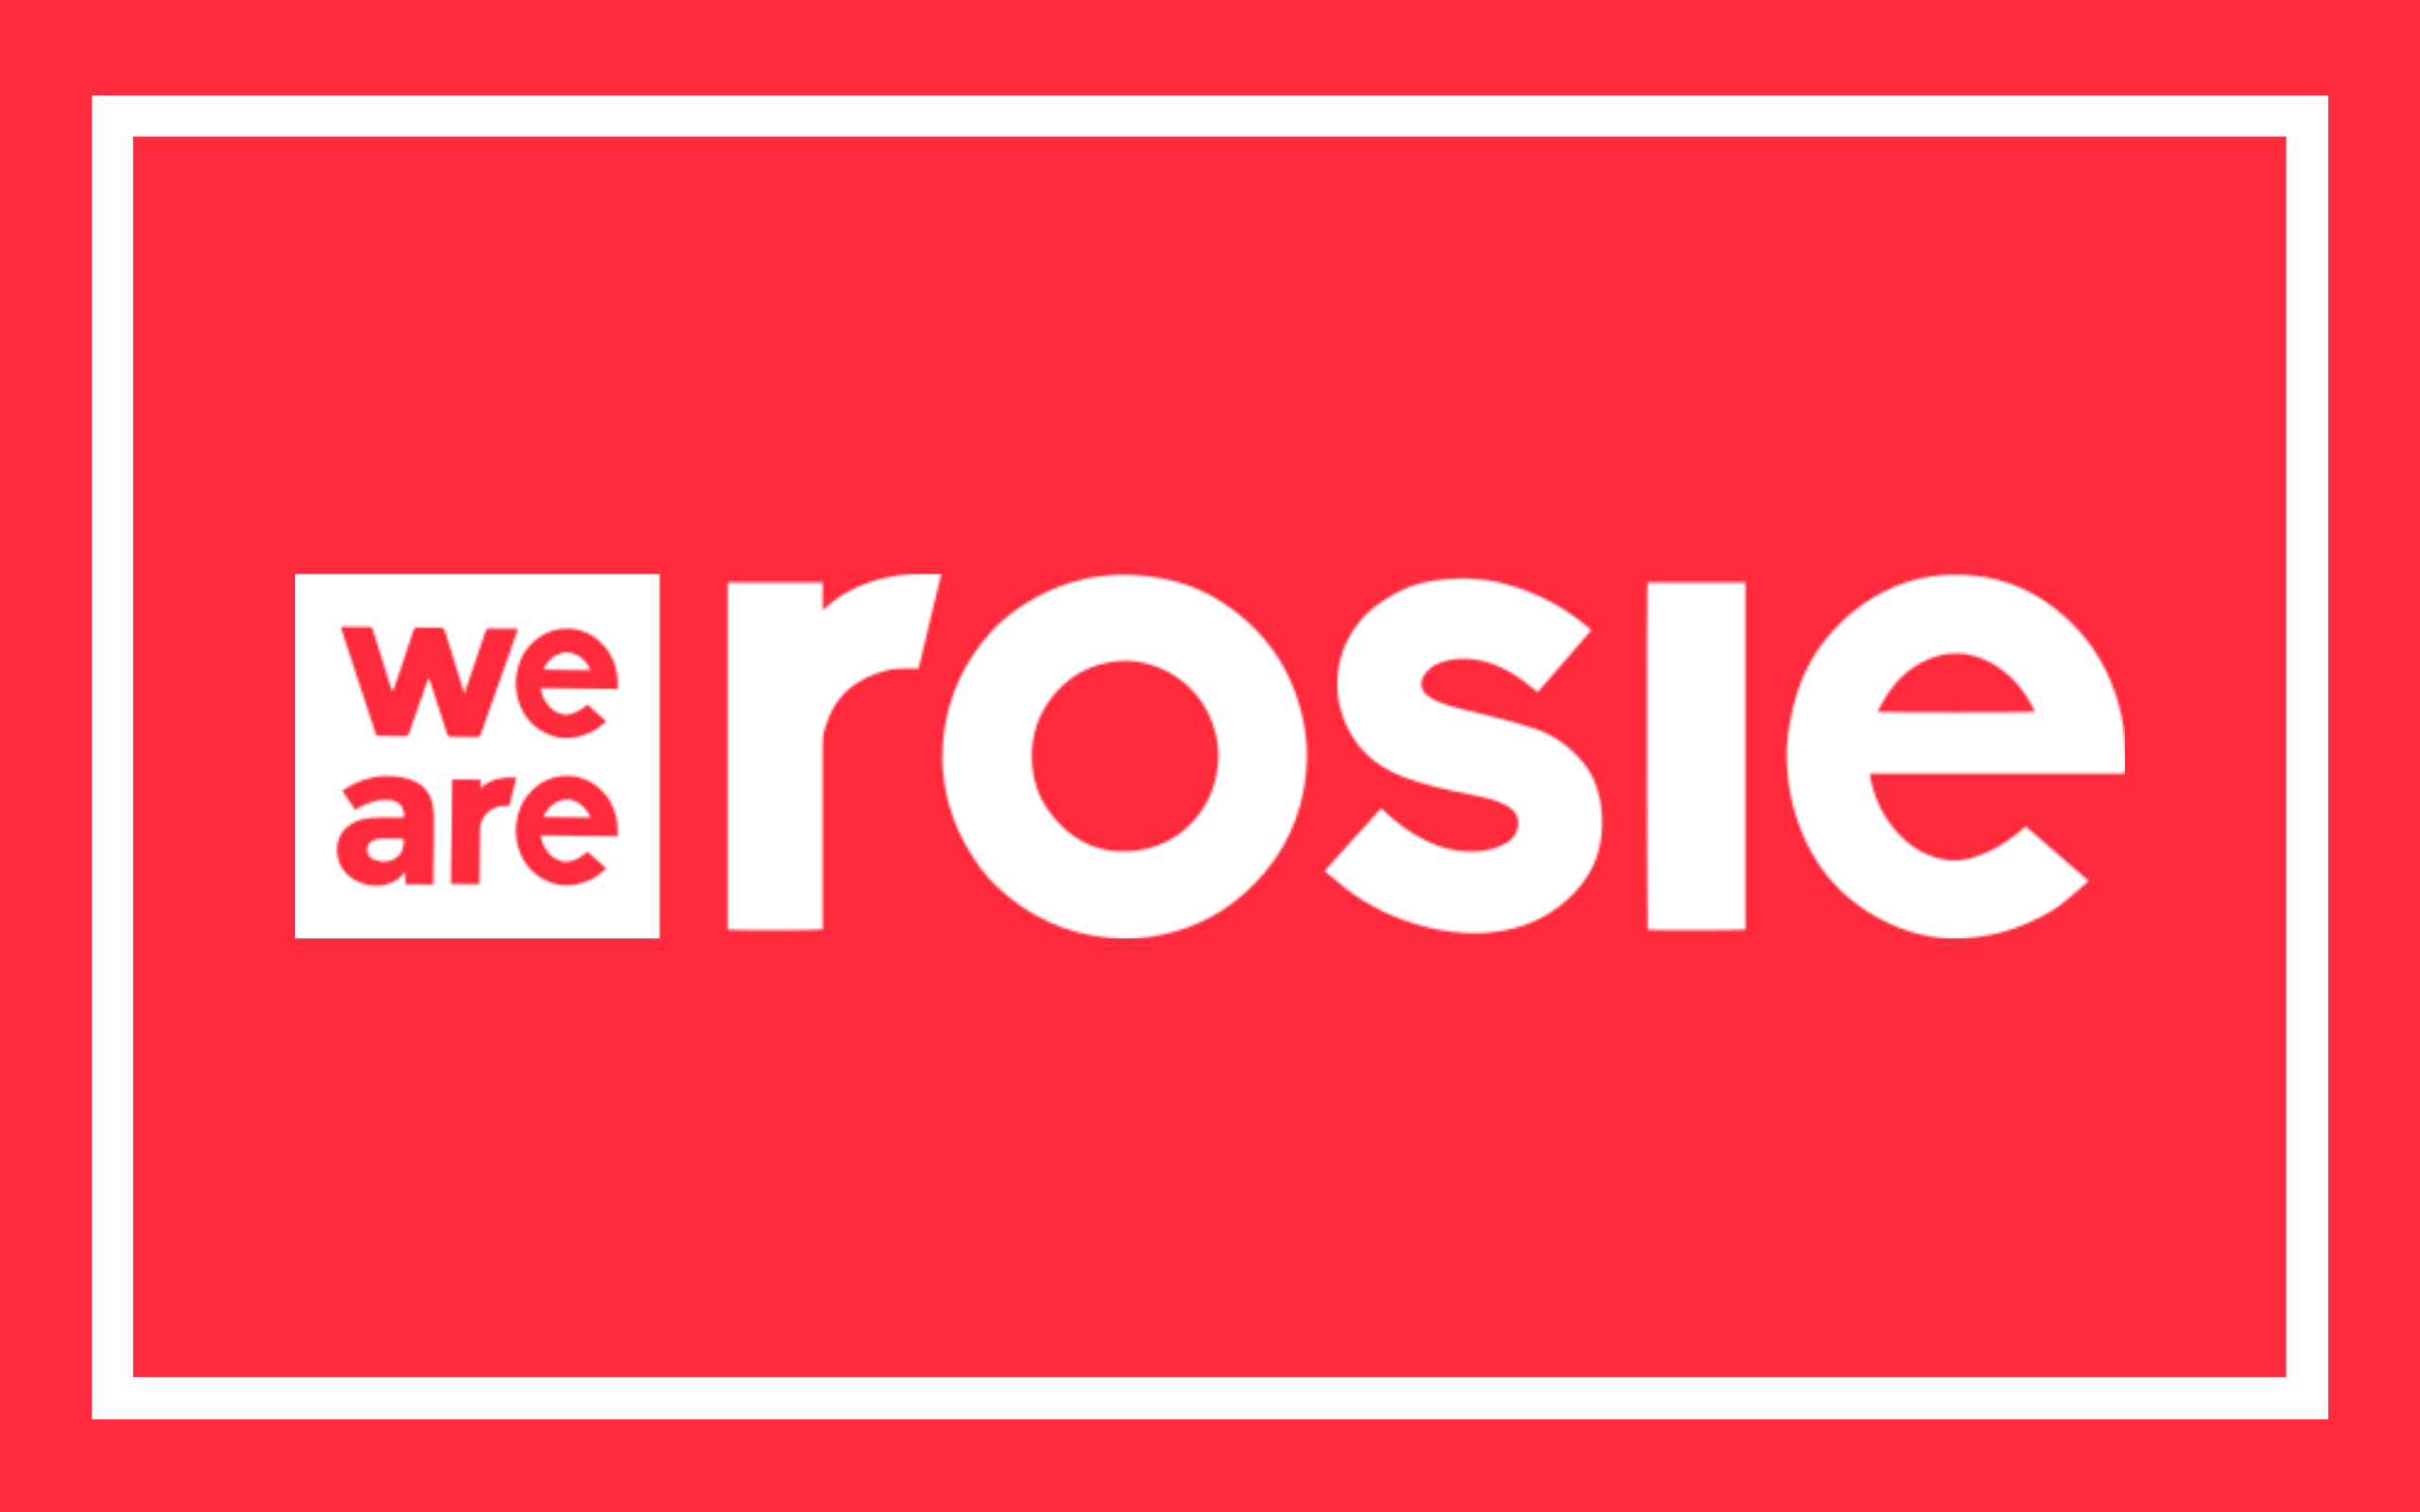 We are Rosie logo.